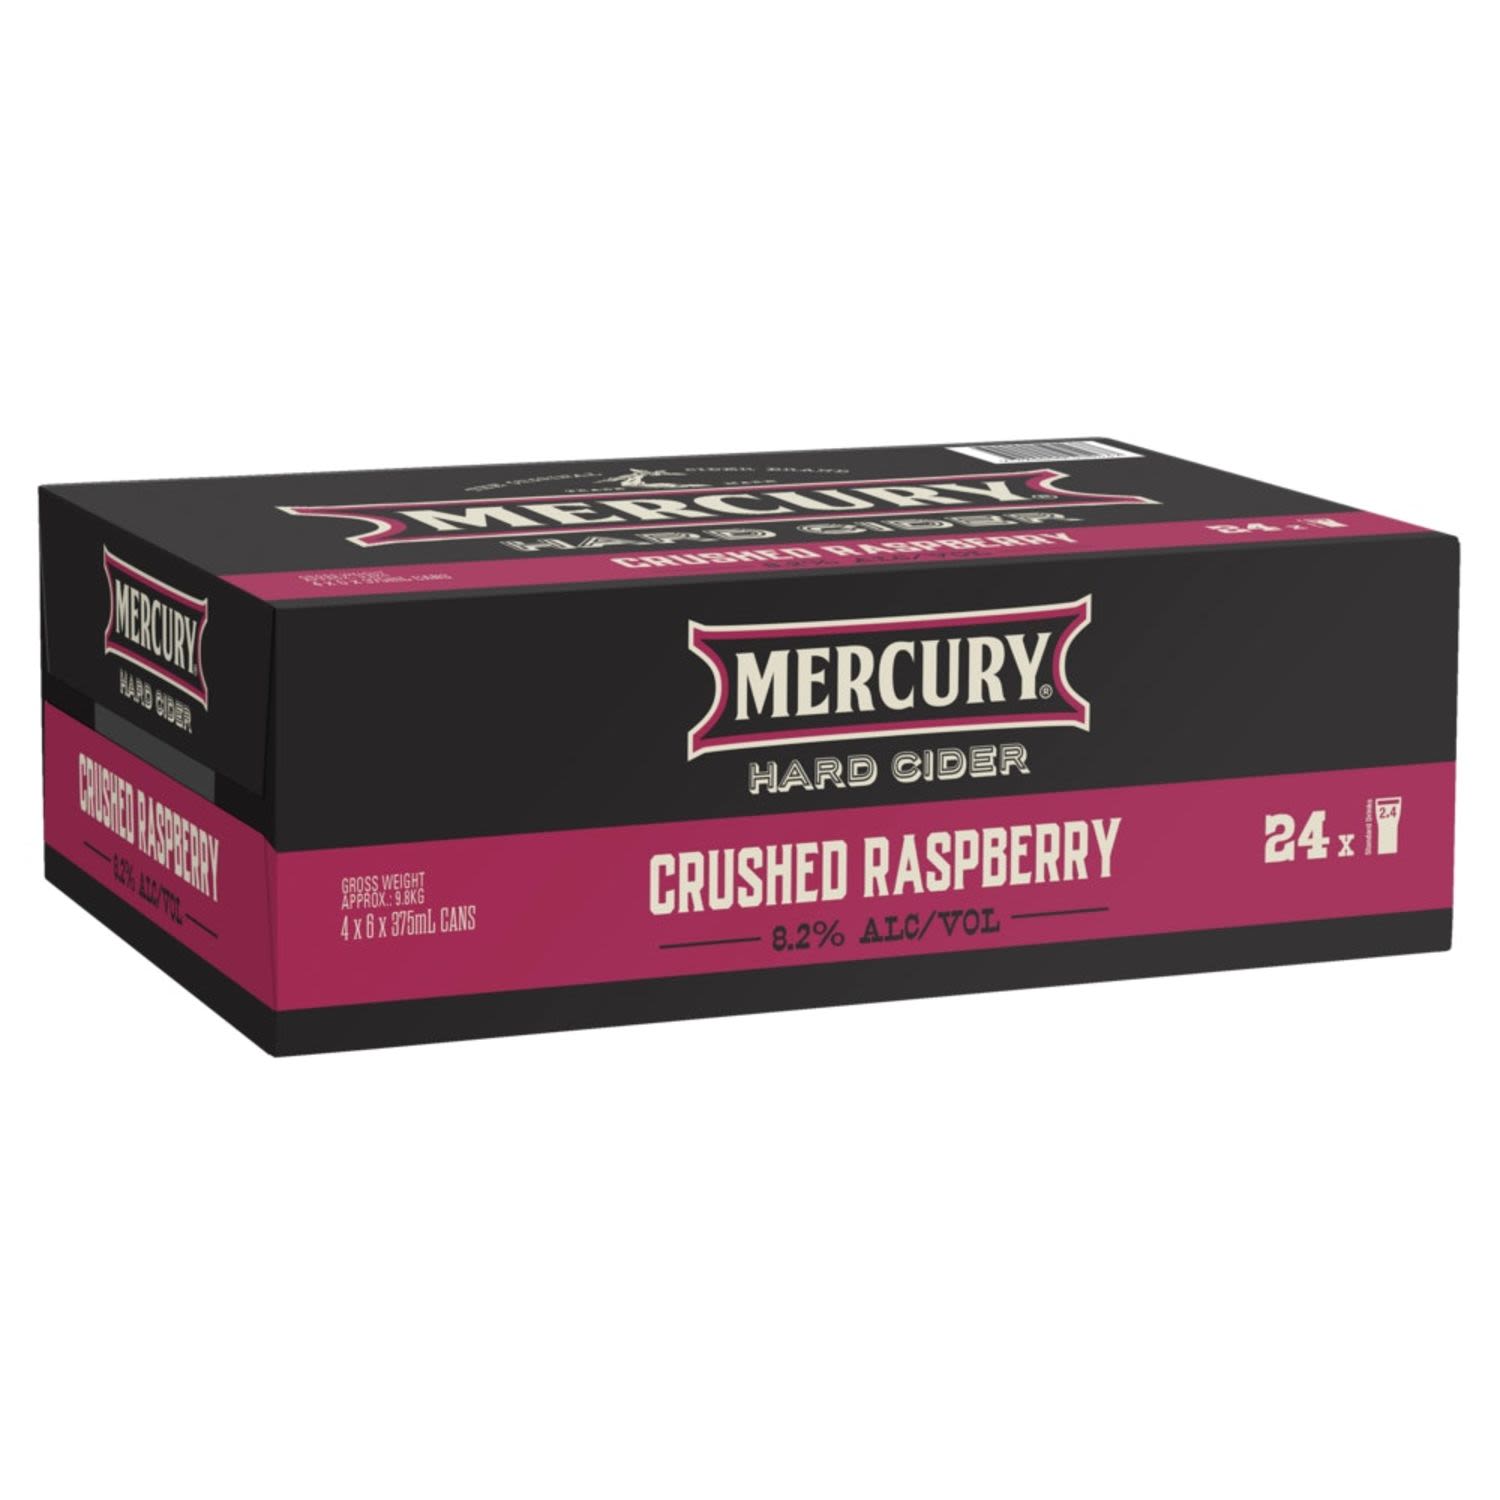 Mercury Hard Cider Crushed Raspberry 375mL Cans<br /> <br />Alcohol Volume: 8.20%<br /><br />Pack Format: 24 Pack<br /><br />Standard Drinks: 2.4</br /><br />Pack Type: Can<br /><br />Country of Origin: Australia<br />